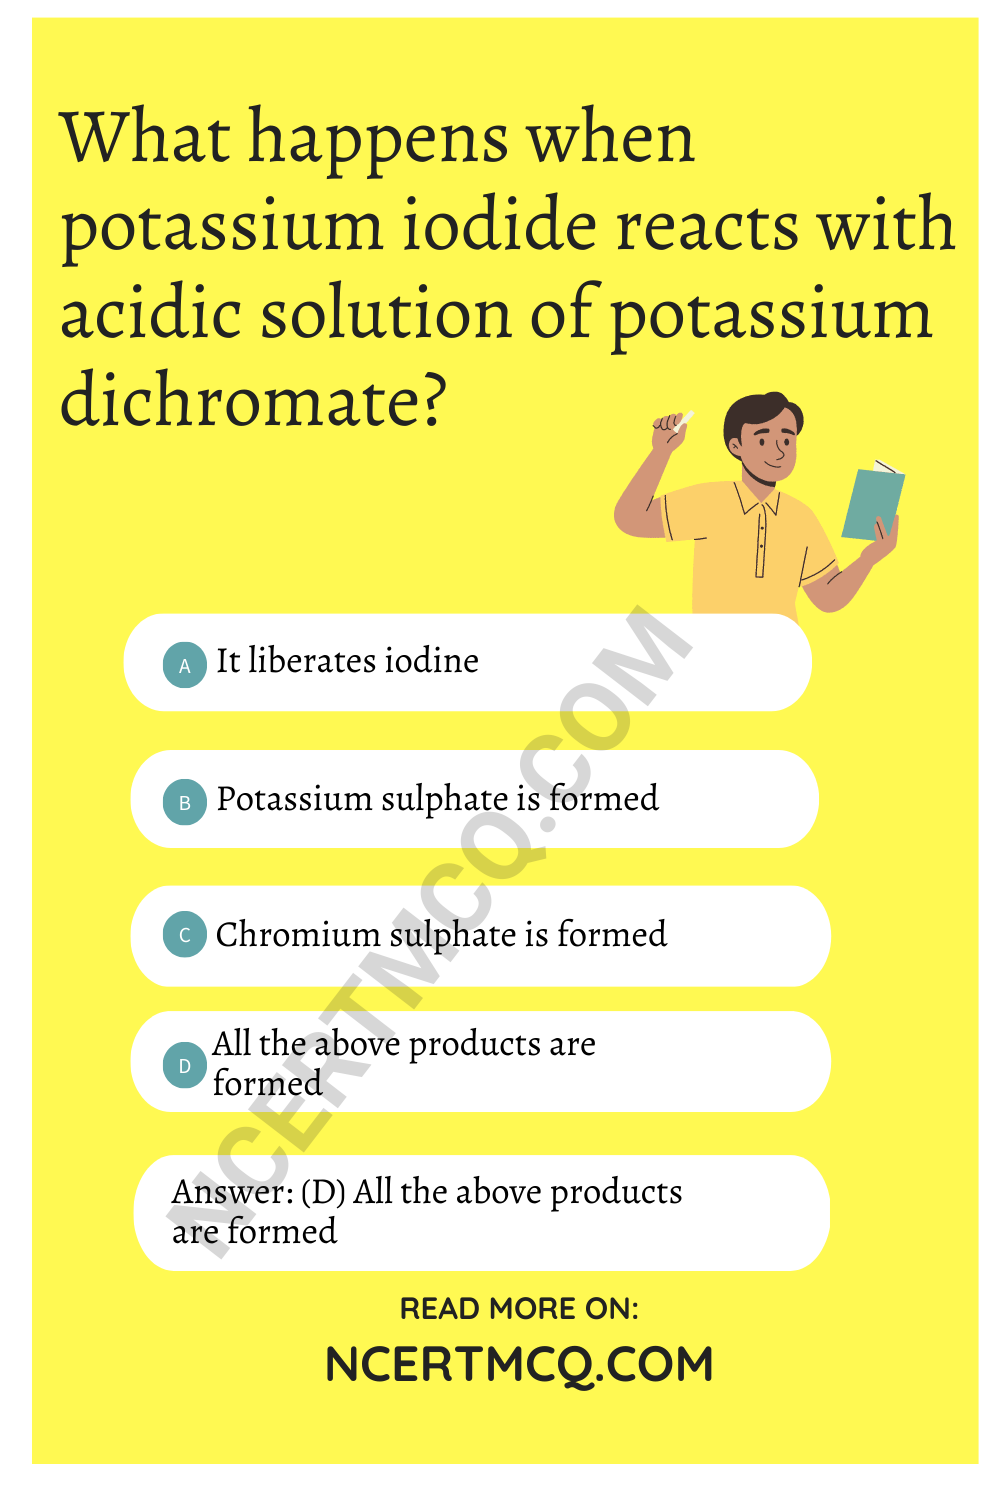 What happens when potassium iodide reacts with acidic solution of potassium dichromate?